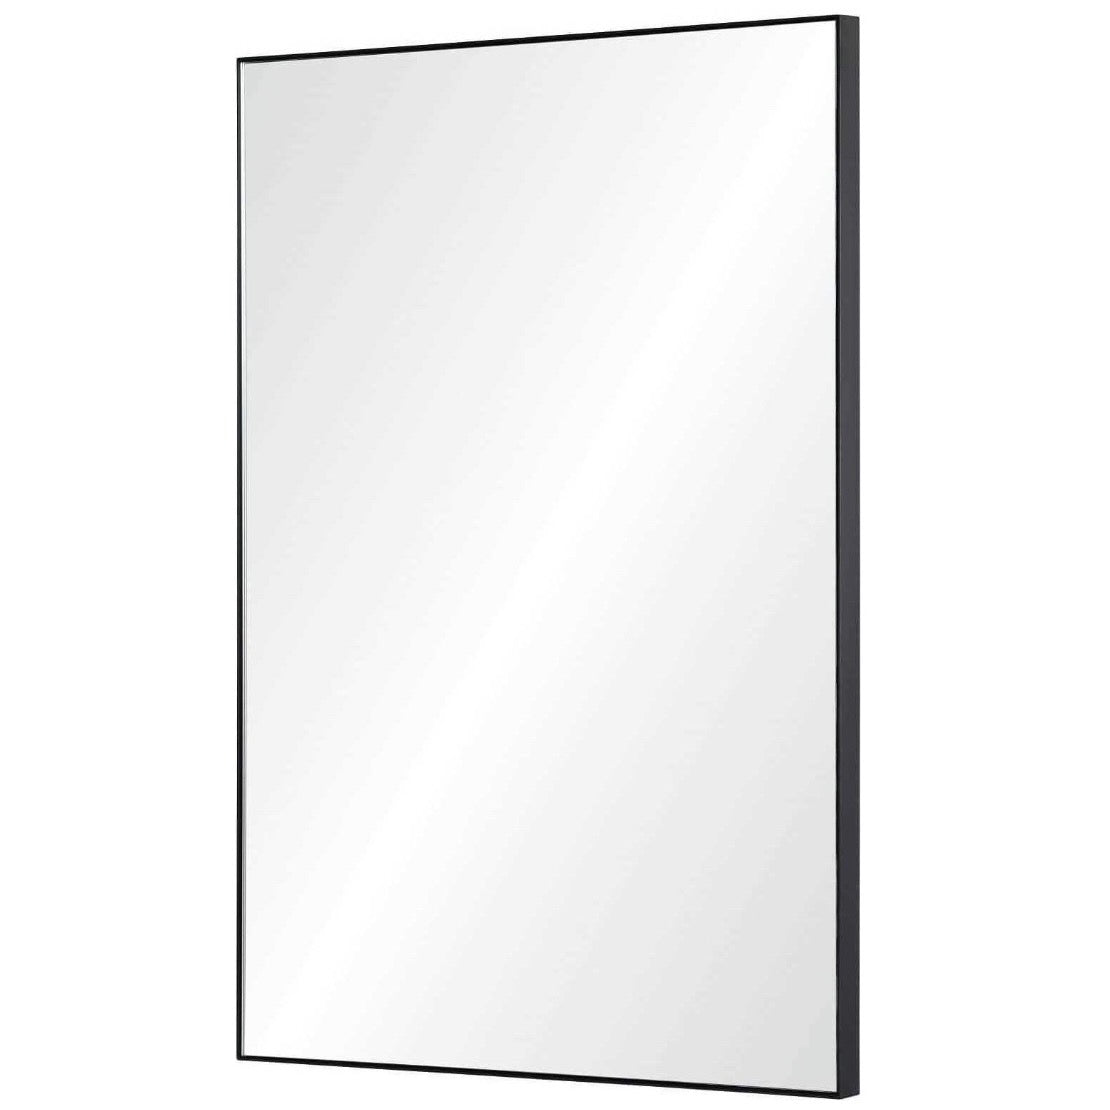 Mirror Home | Black Nickel 30W x 40H in Rectangular Wall Mirror Black Nickel